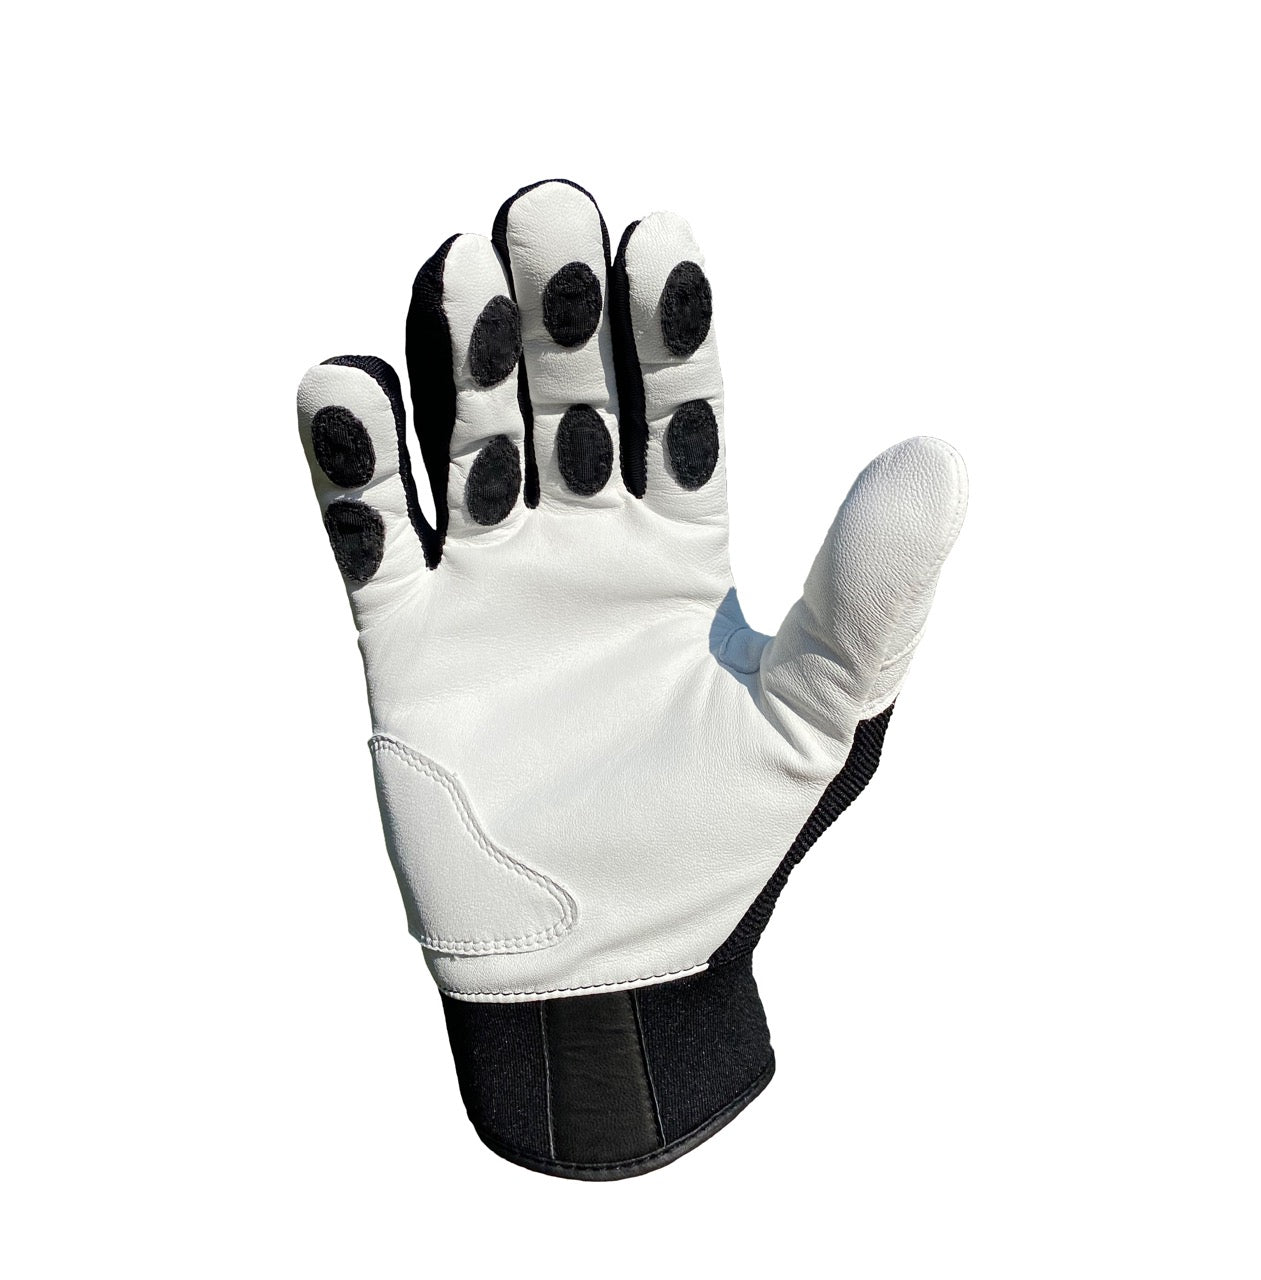 Palm view of Black & White Canine VukGripz Batting Gloves